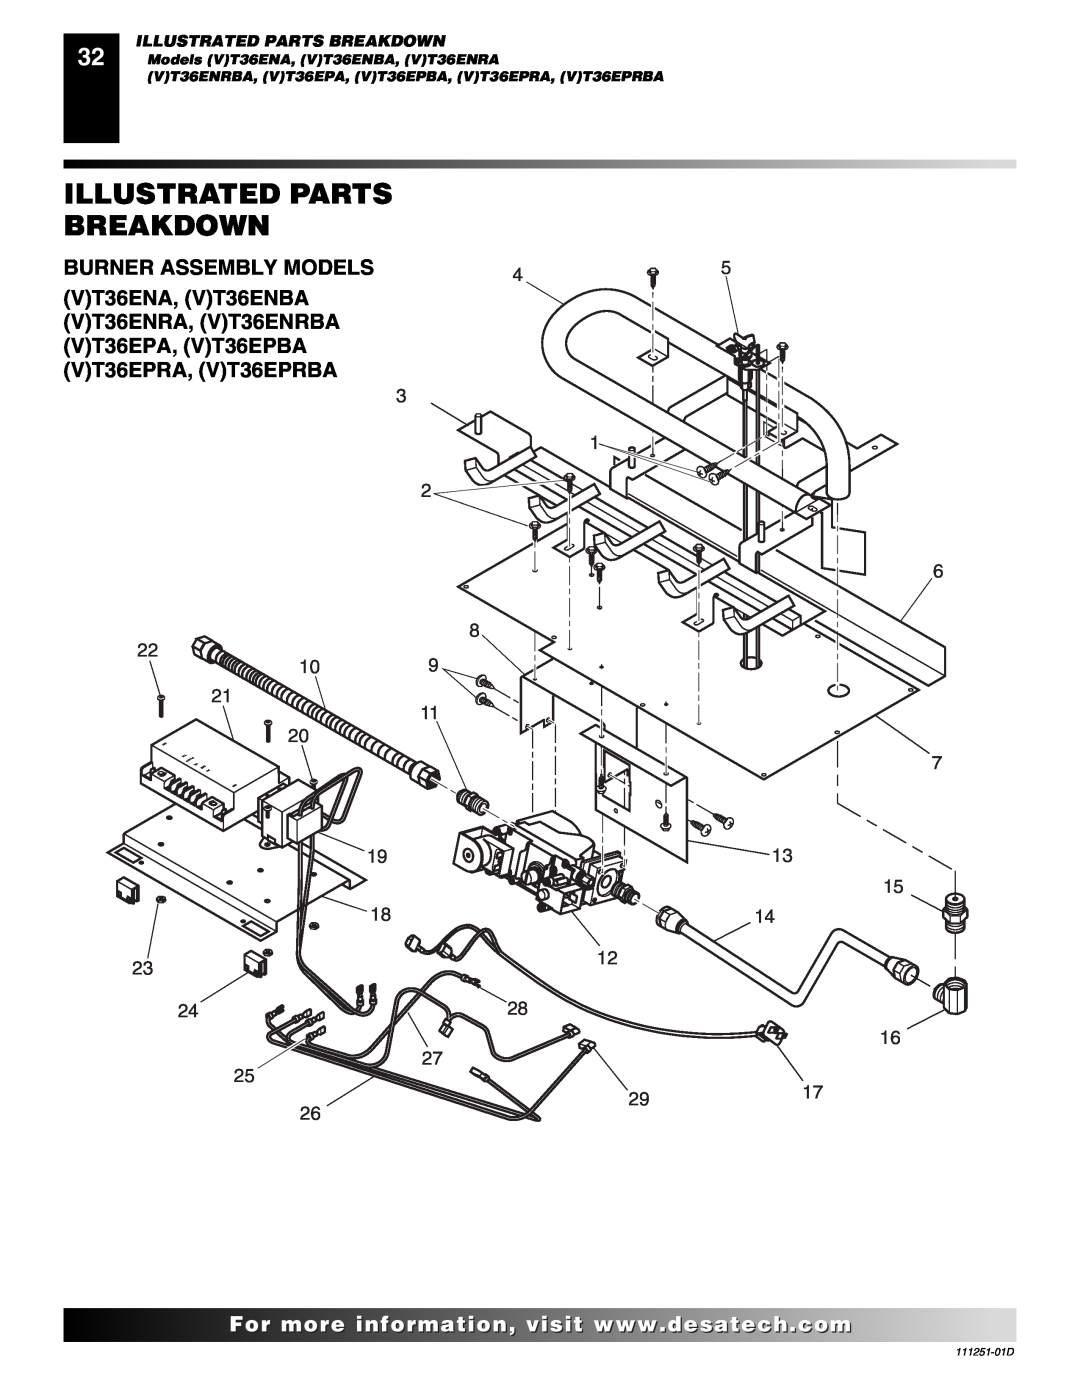 Desa (V)T36EPA SERIES, (V)T36ENA SERIES installation manual Illustrated Parts Breakdown, Burner Assembly Models 